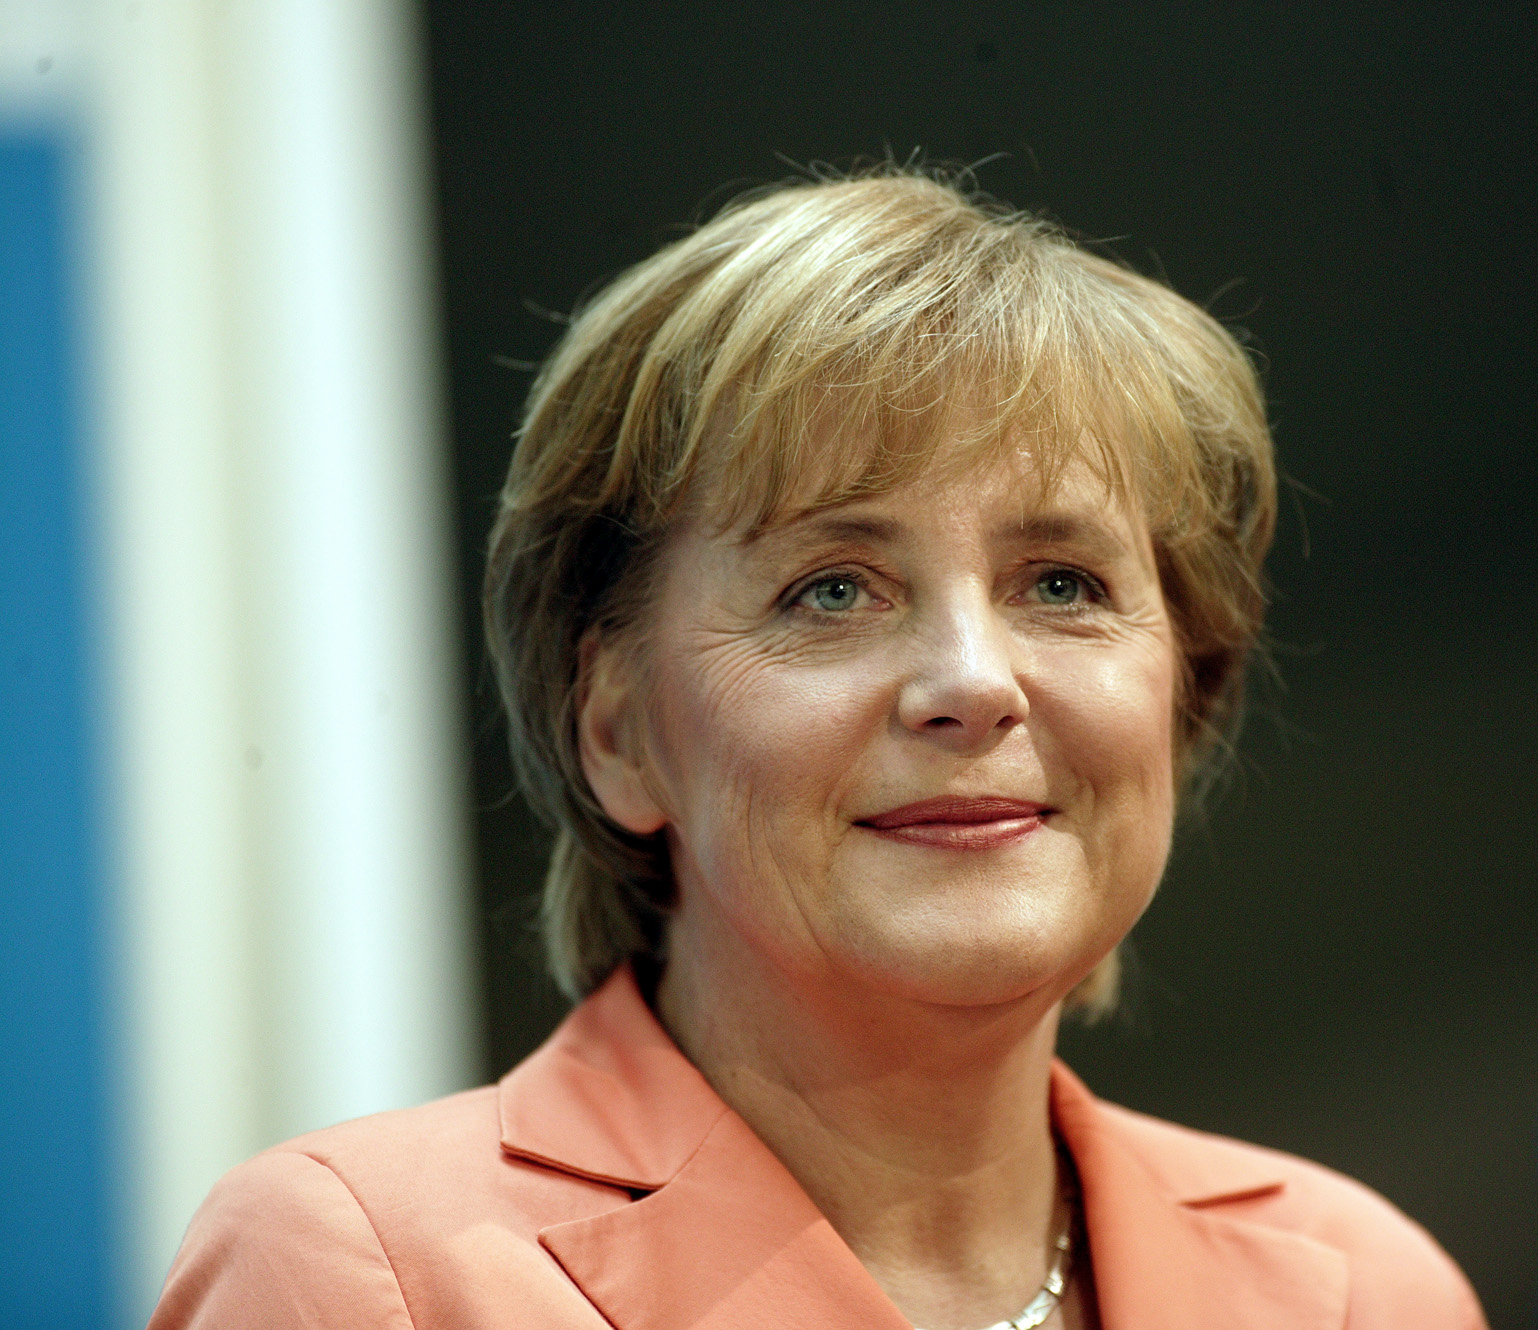 Dr Angela Merkel